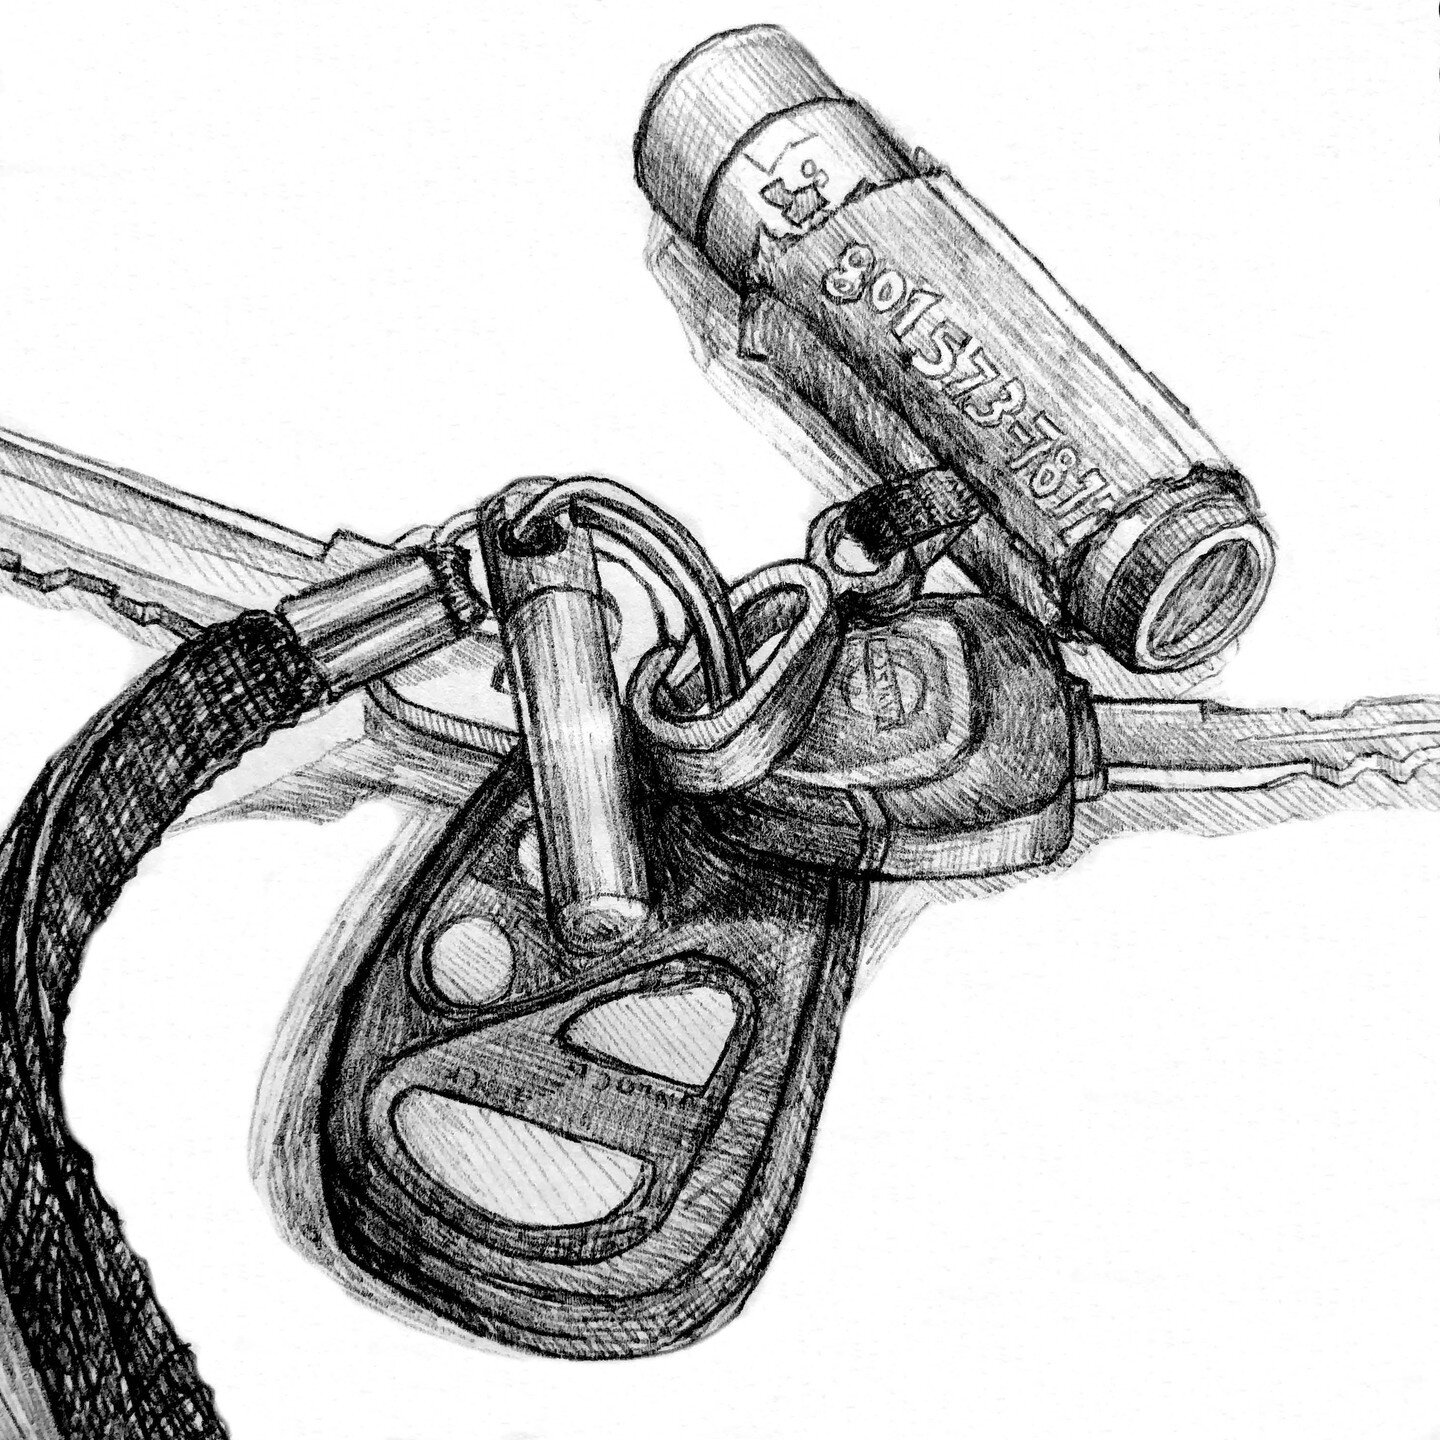 Throwback sketch of my keys⁠
⁠
#bic #bicpen #draweveryday⁠
#sketch #sketchbook #drawing #artoftheday #doodle